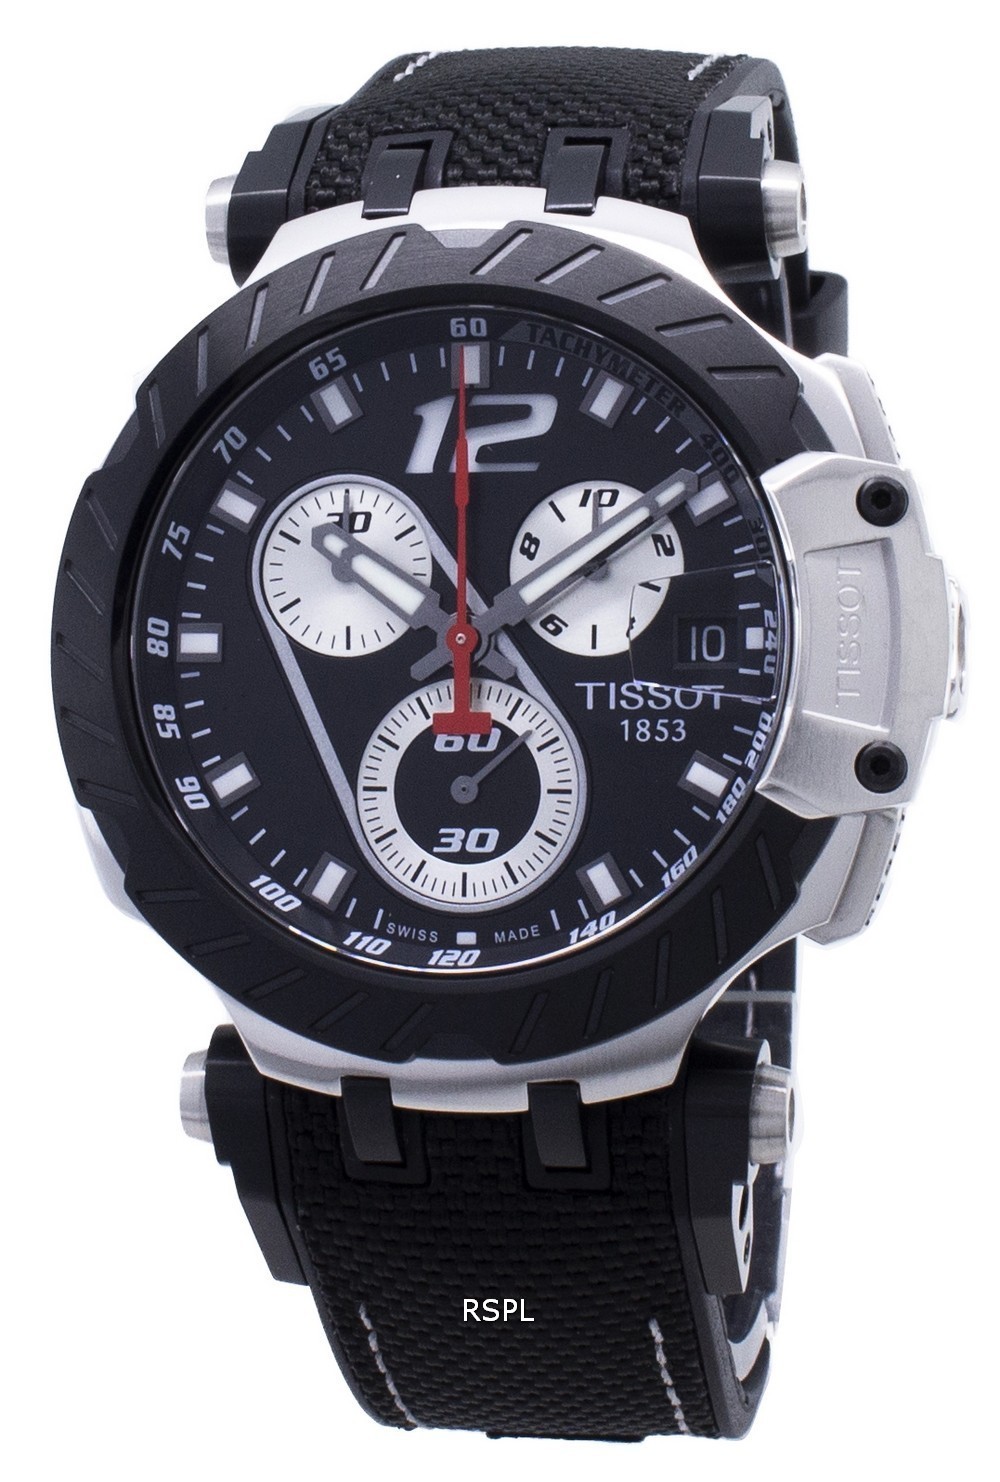 Tissot T Race Motogp Limited Edition Uhr Jorge Lorenzo 2019 Herren Chronograph 43mm Schwarz T115 417